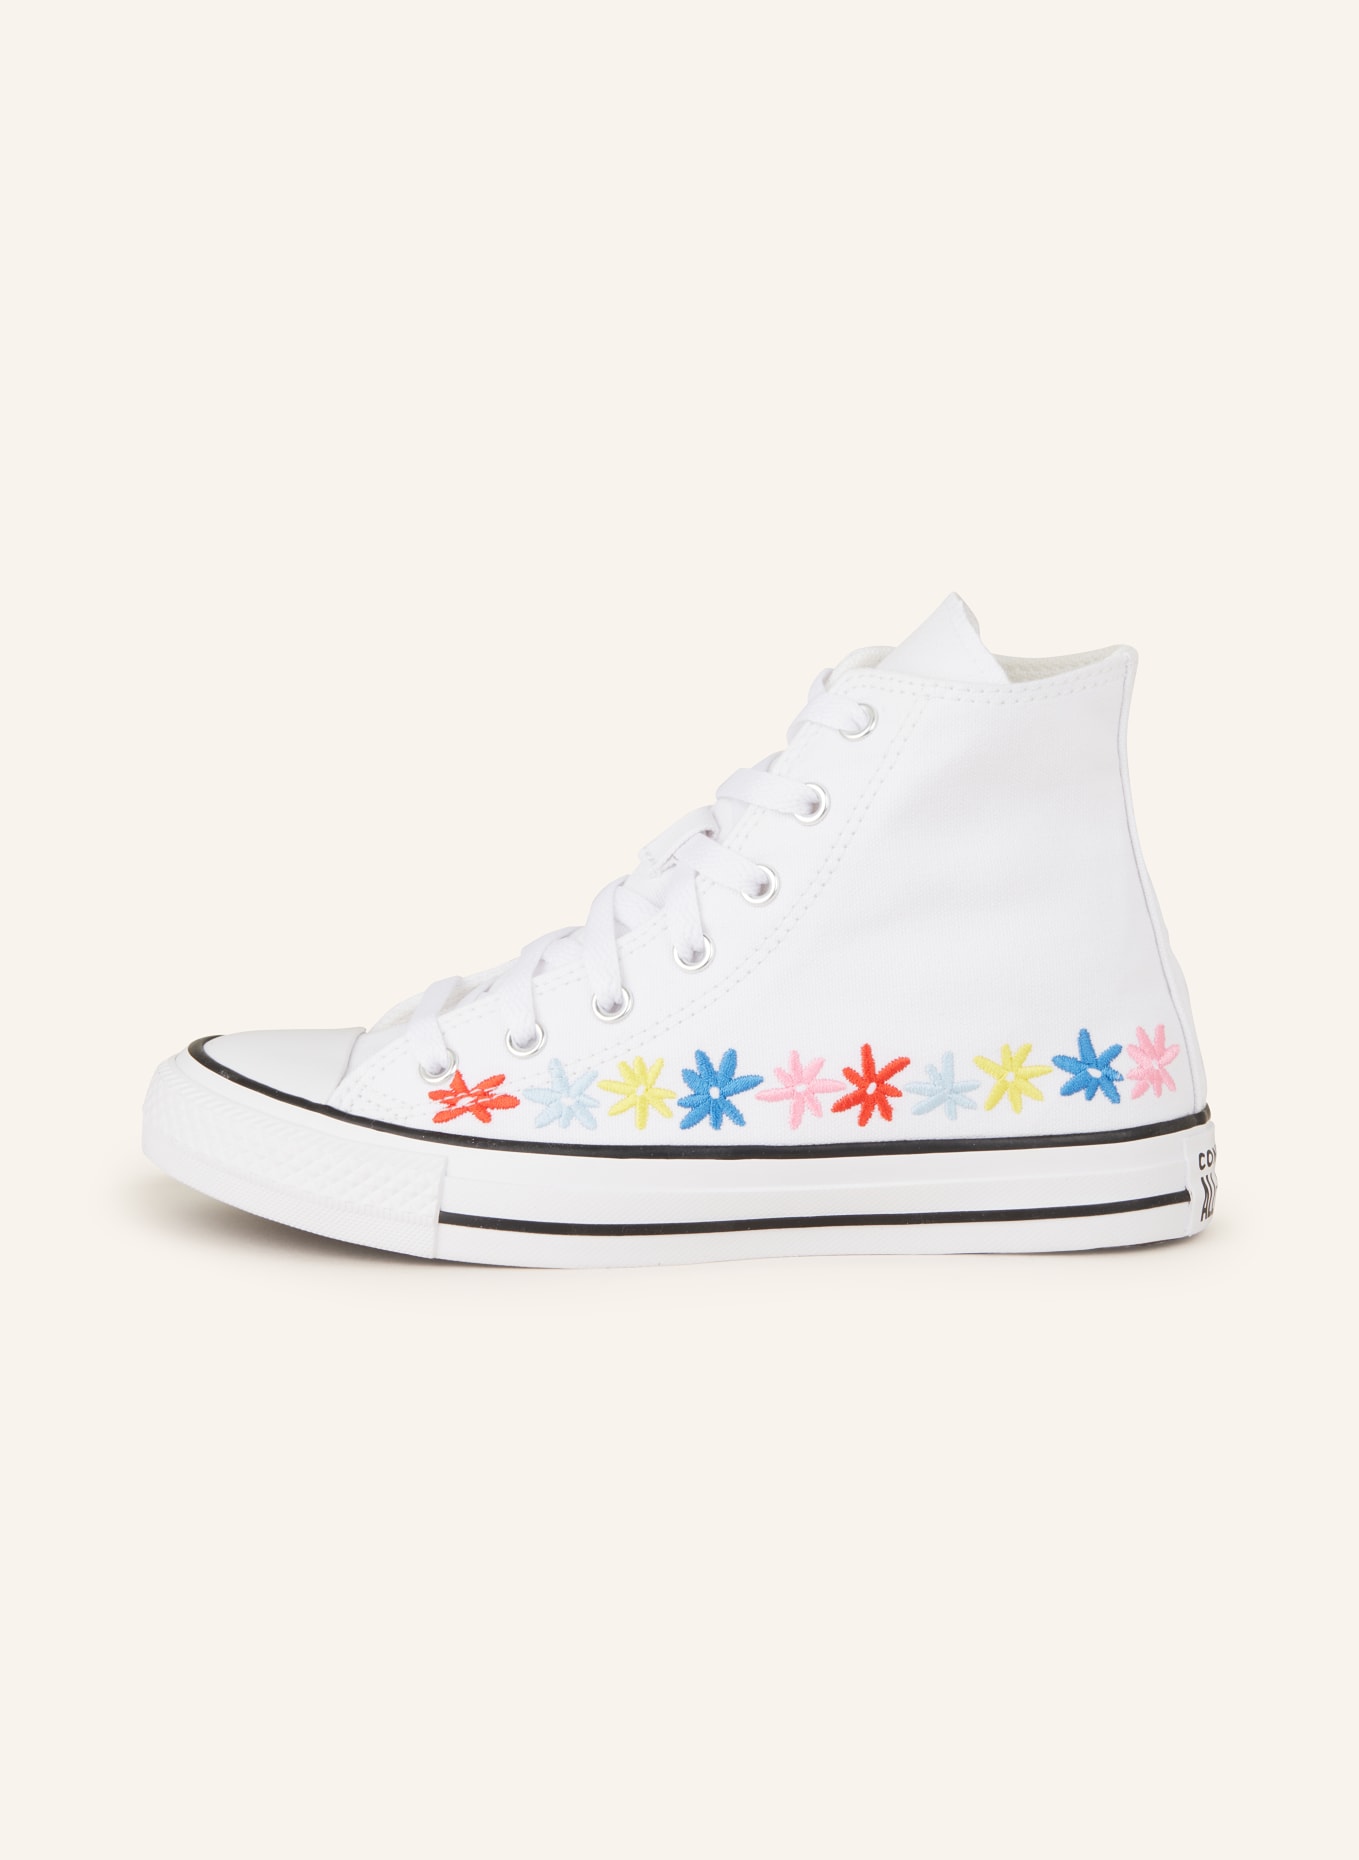 CONVERSE Hightop-Sneaker CHUCK TAYLOR ALL STAR, Farbe: WEISS/ ROT/ HELLBLAU (Bild 4)